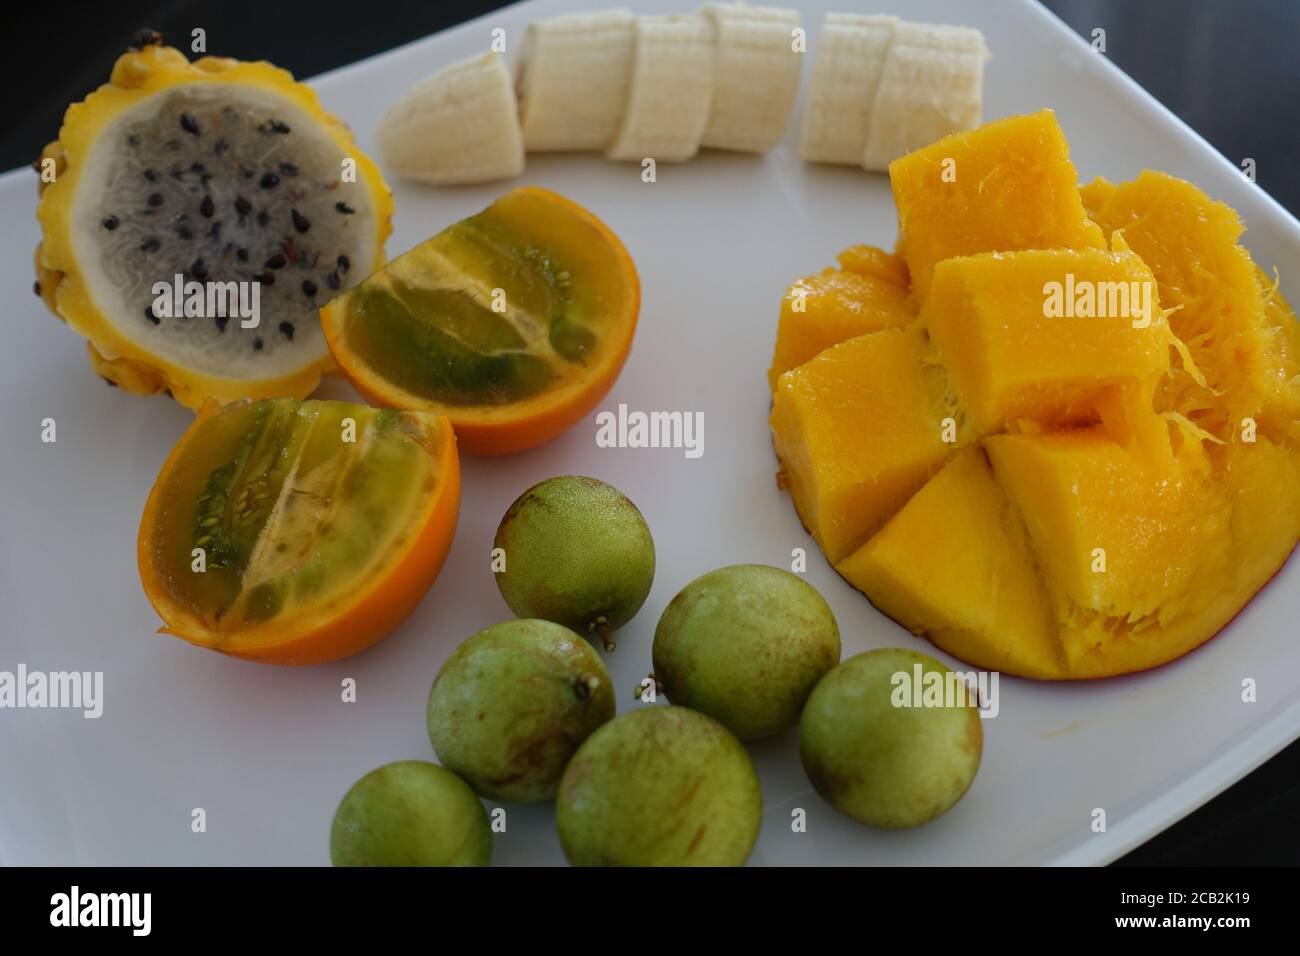 Collection of tropical fruits - Mango, Banana, Dragonfruit, Mammon, Lulo. Stock Photo